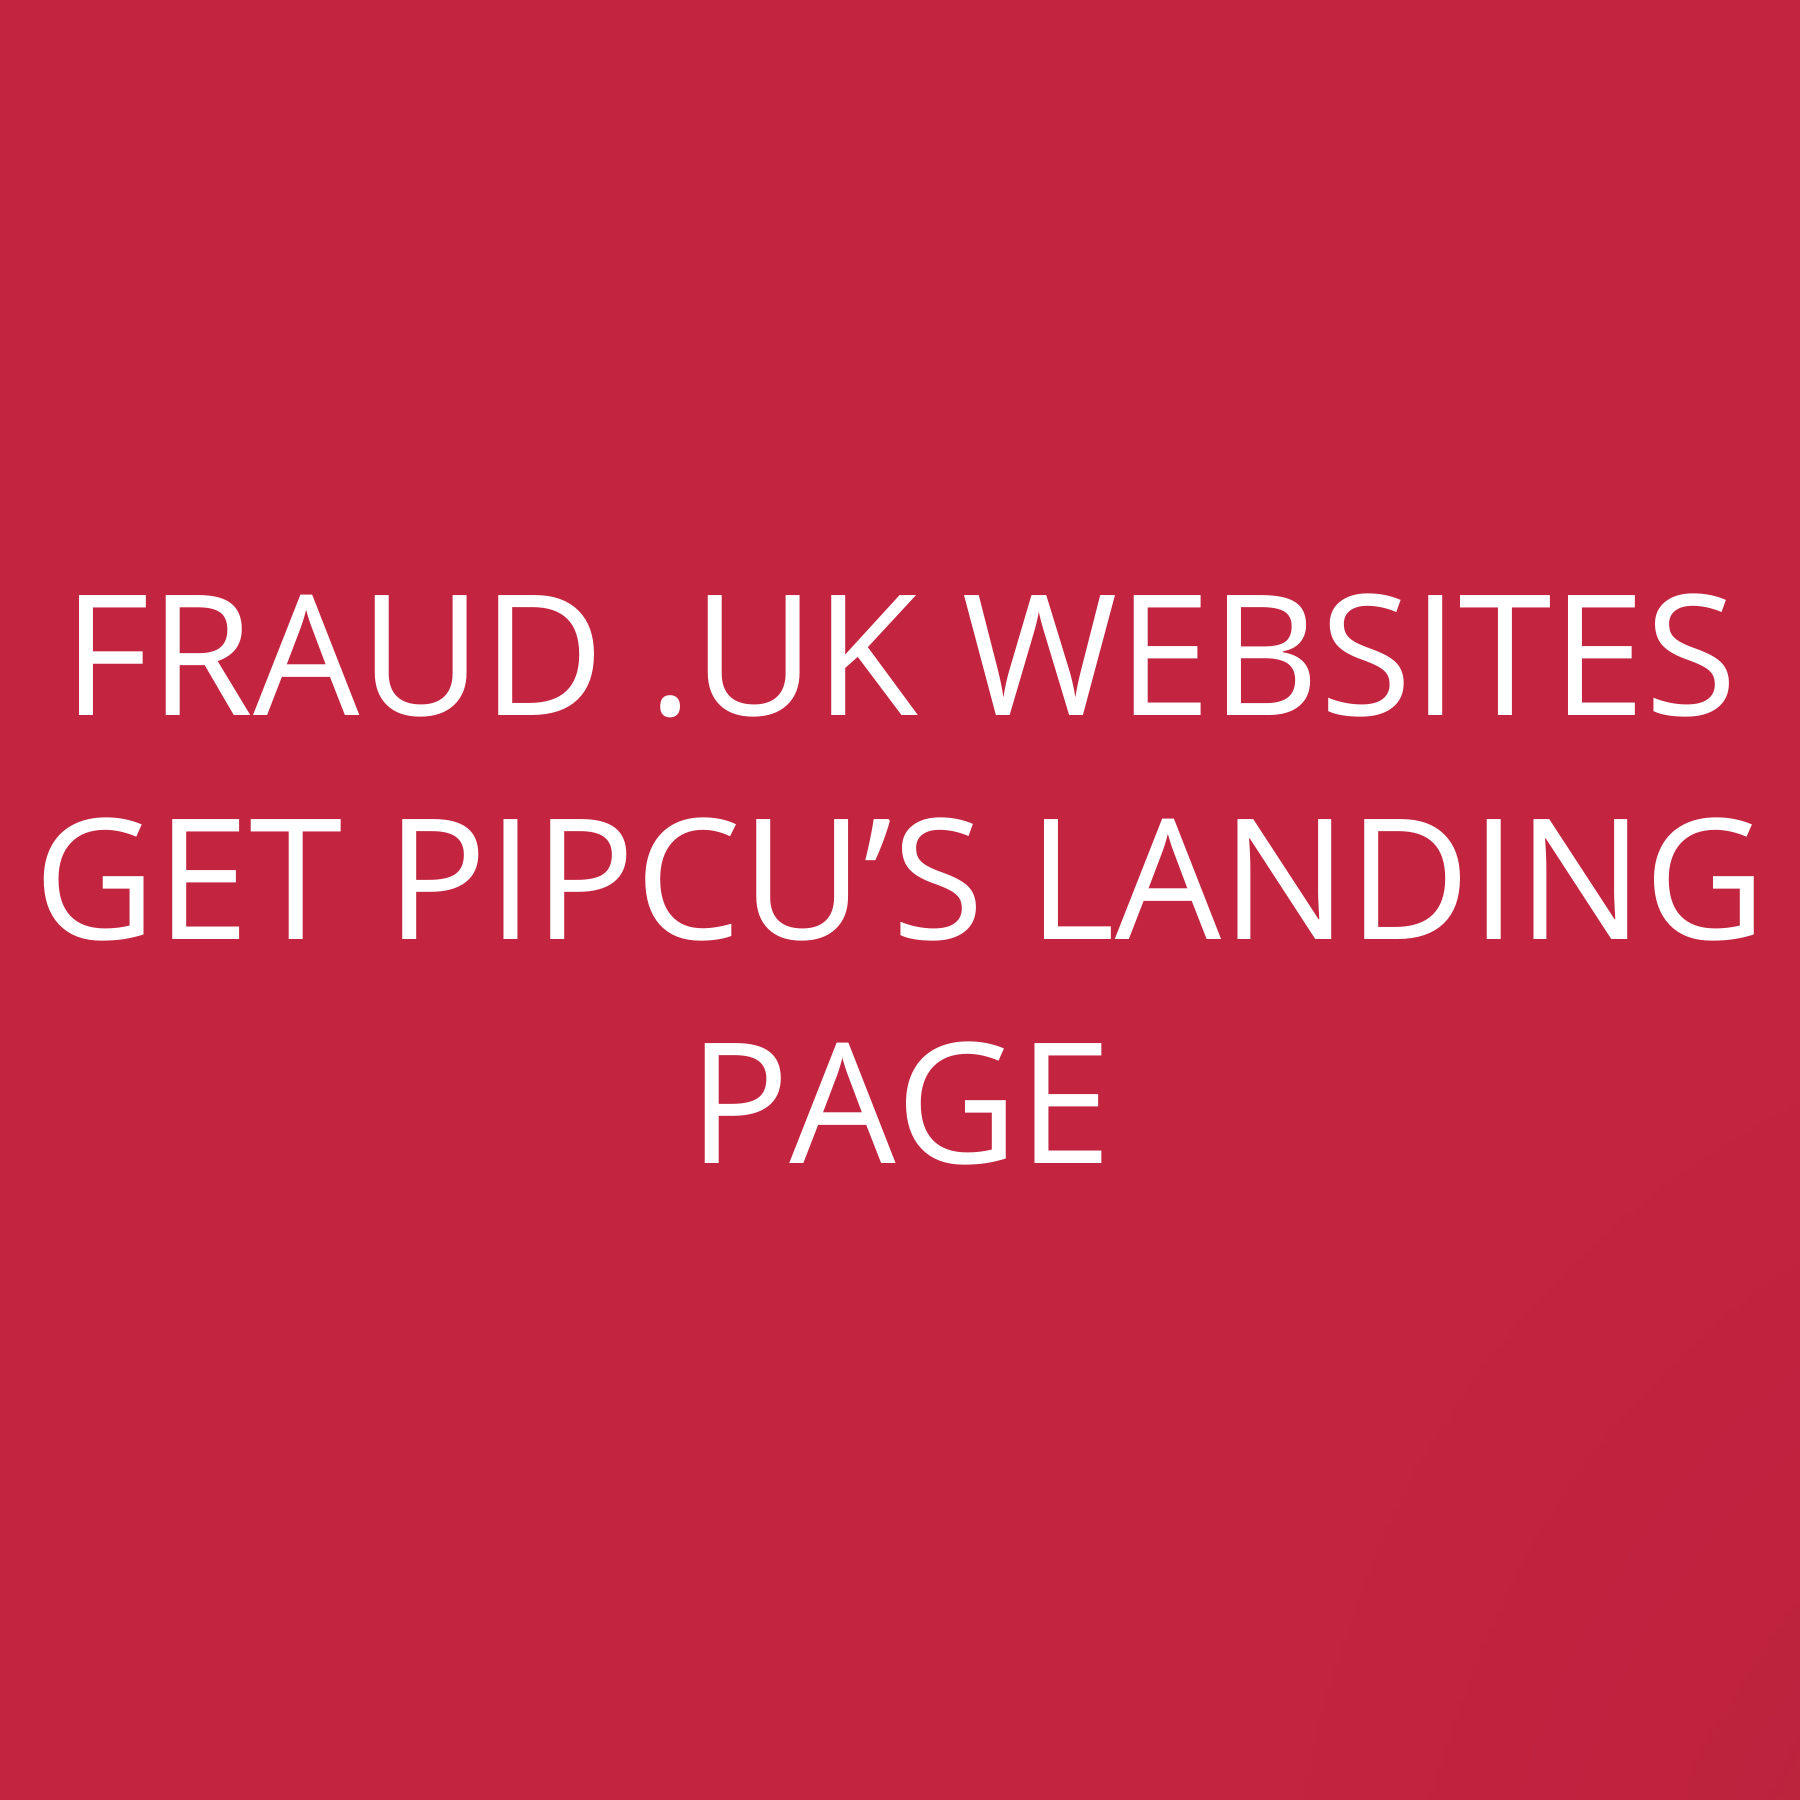 Fraud .uk websites get PIPCU’s landing page